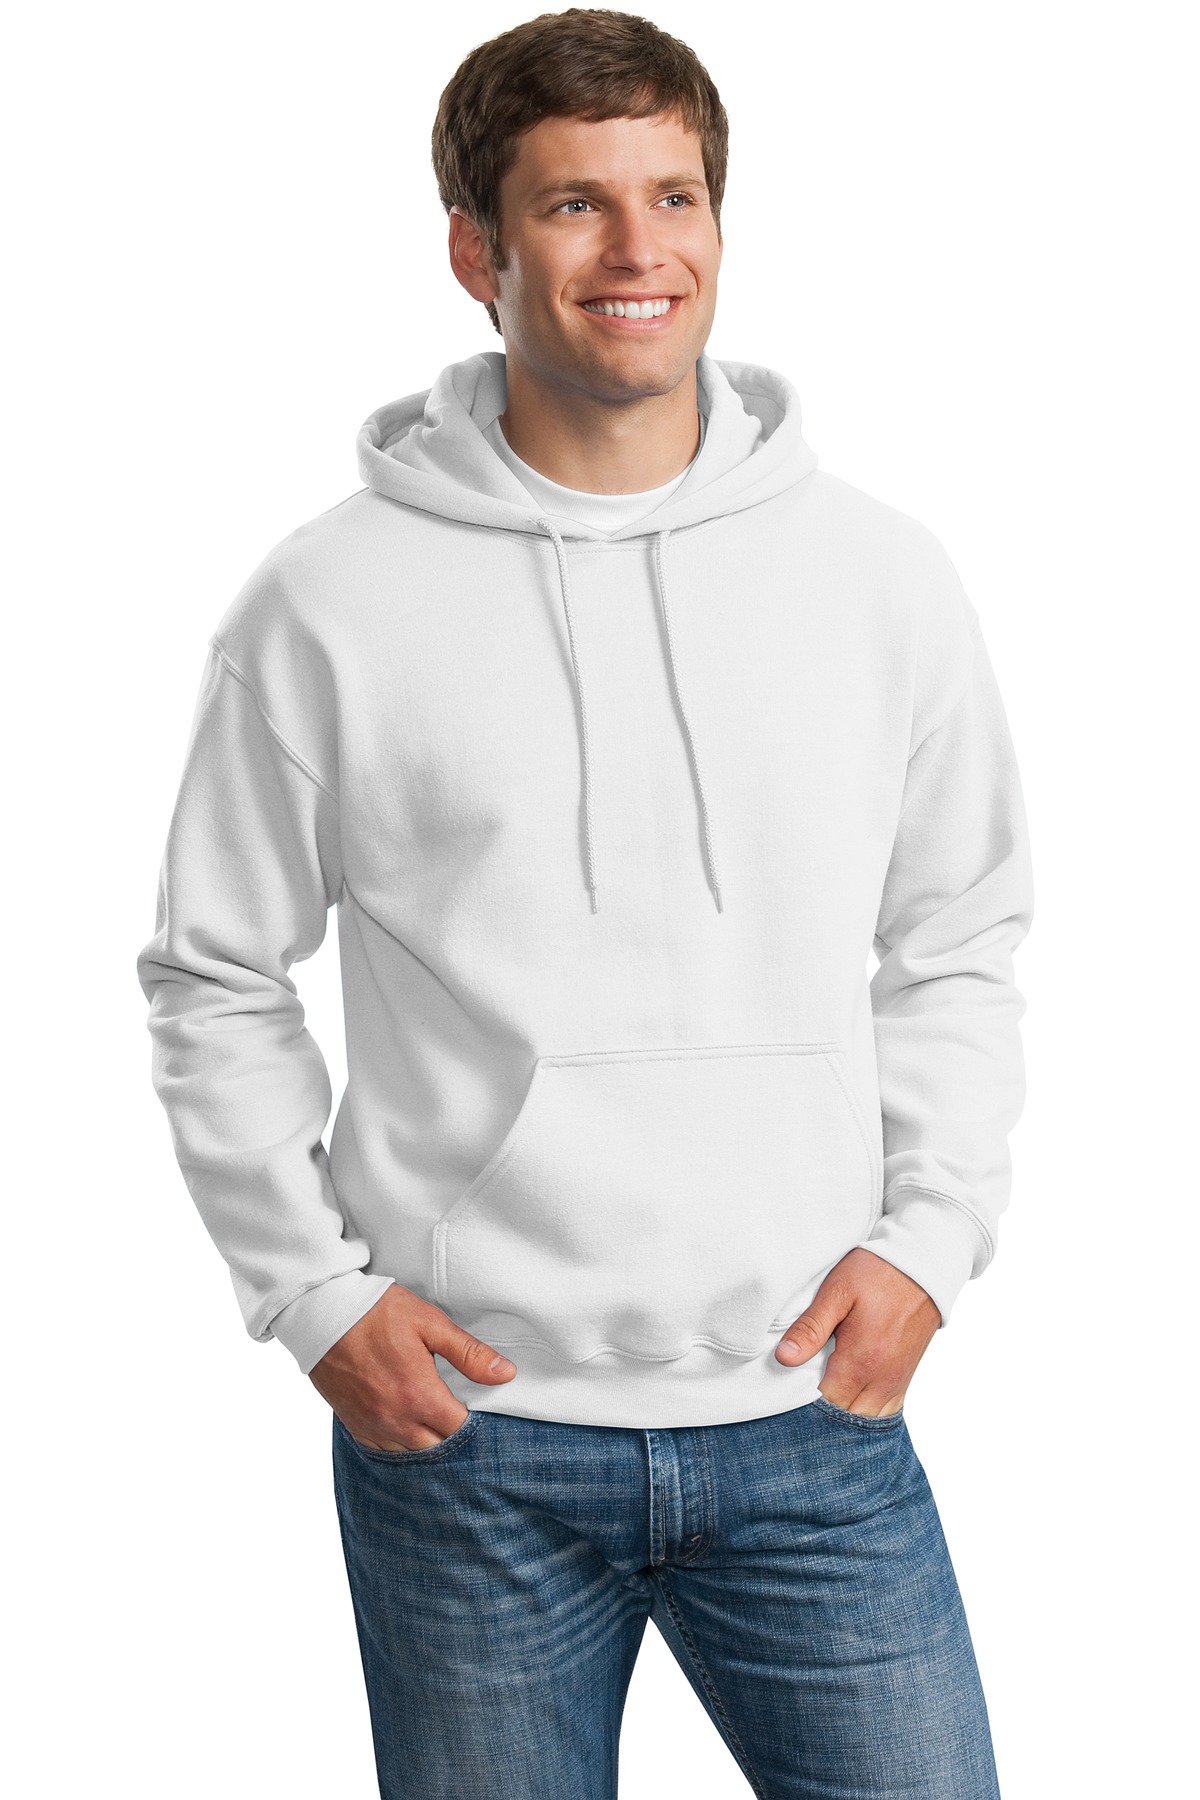 G125 – Gildan – DryBlend Pullover Hooded Sweatshirt – Safari Sun